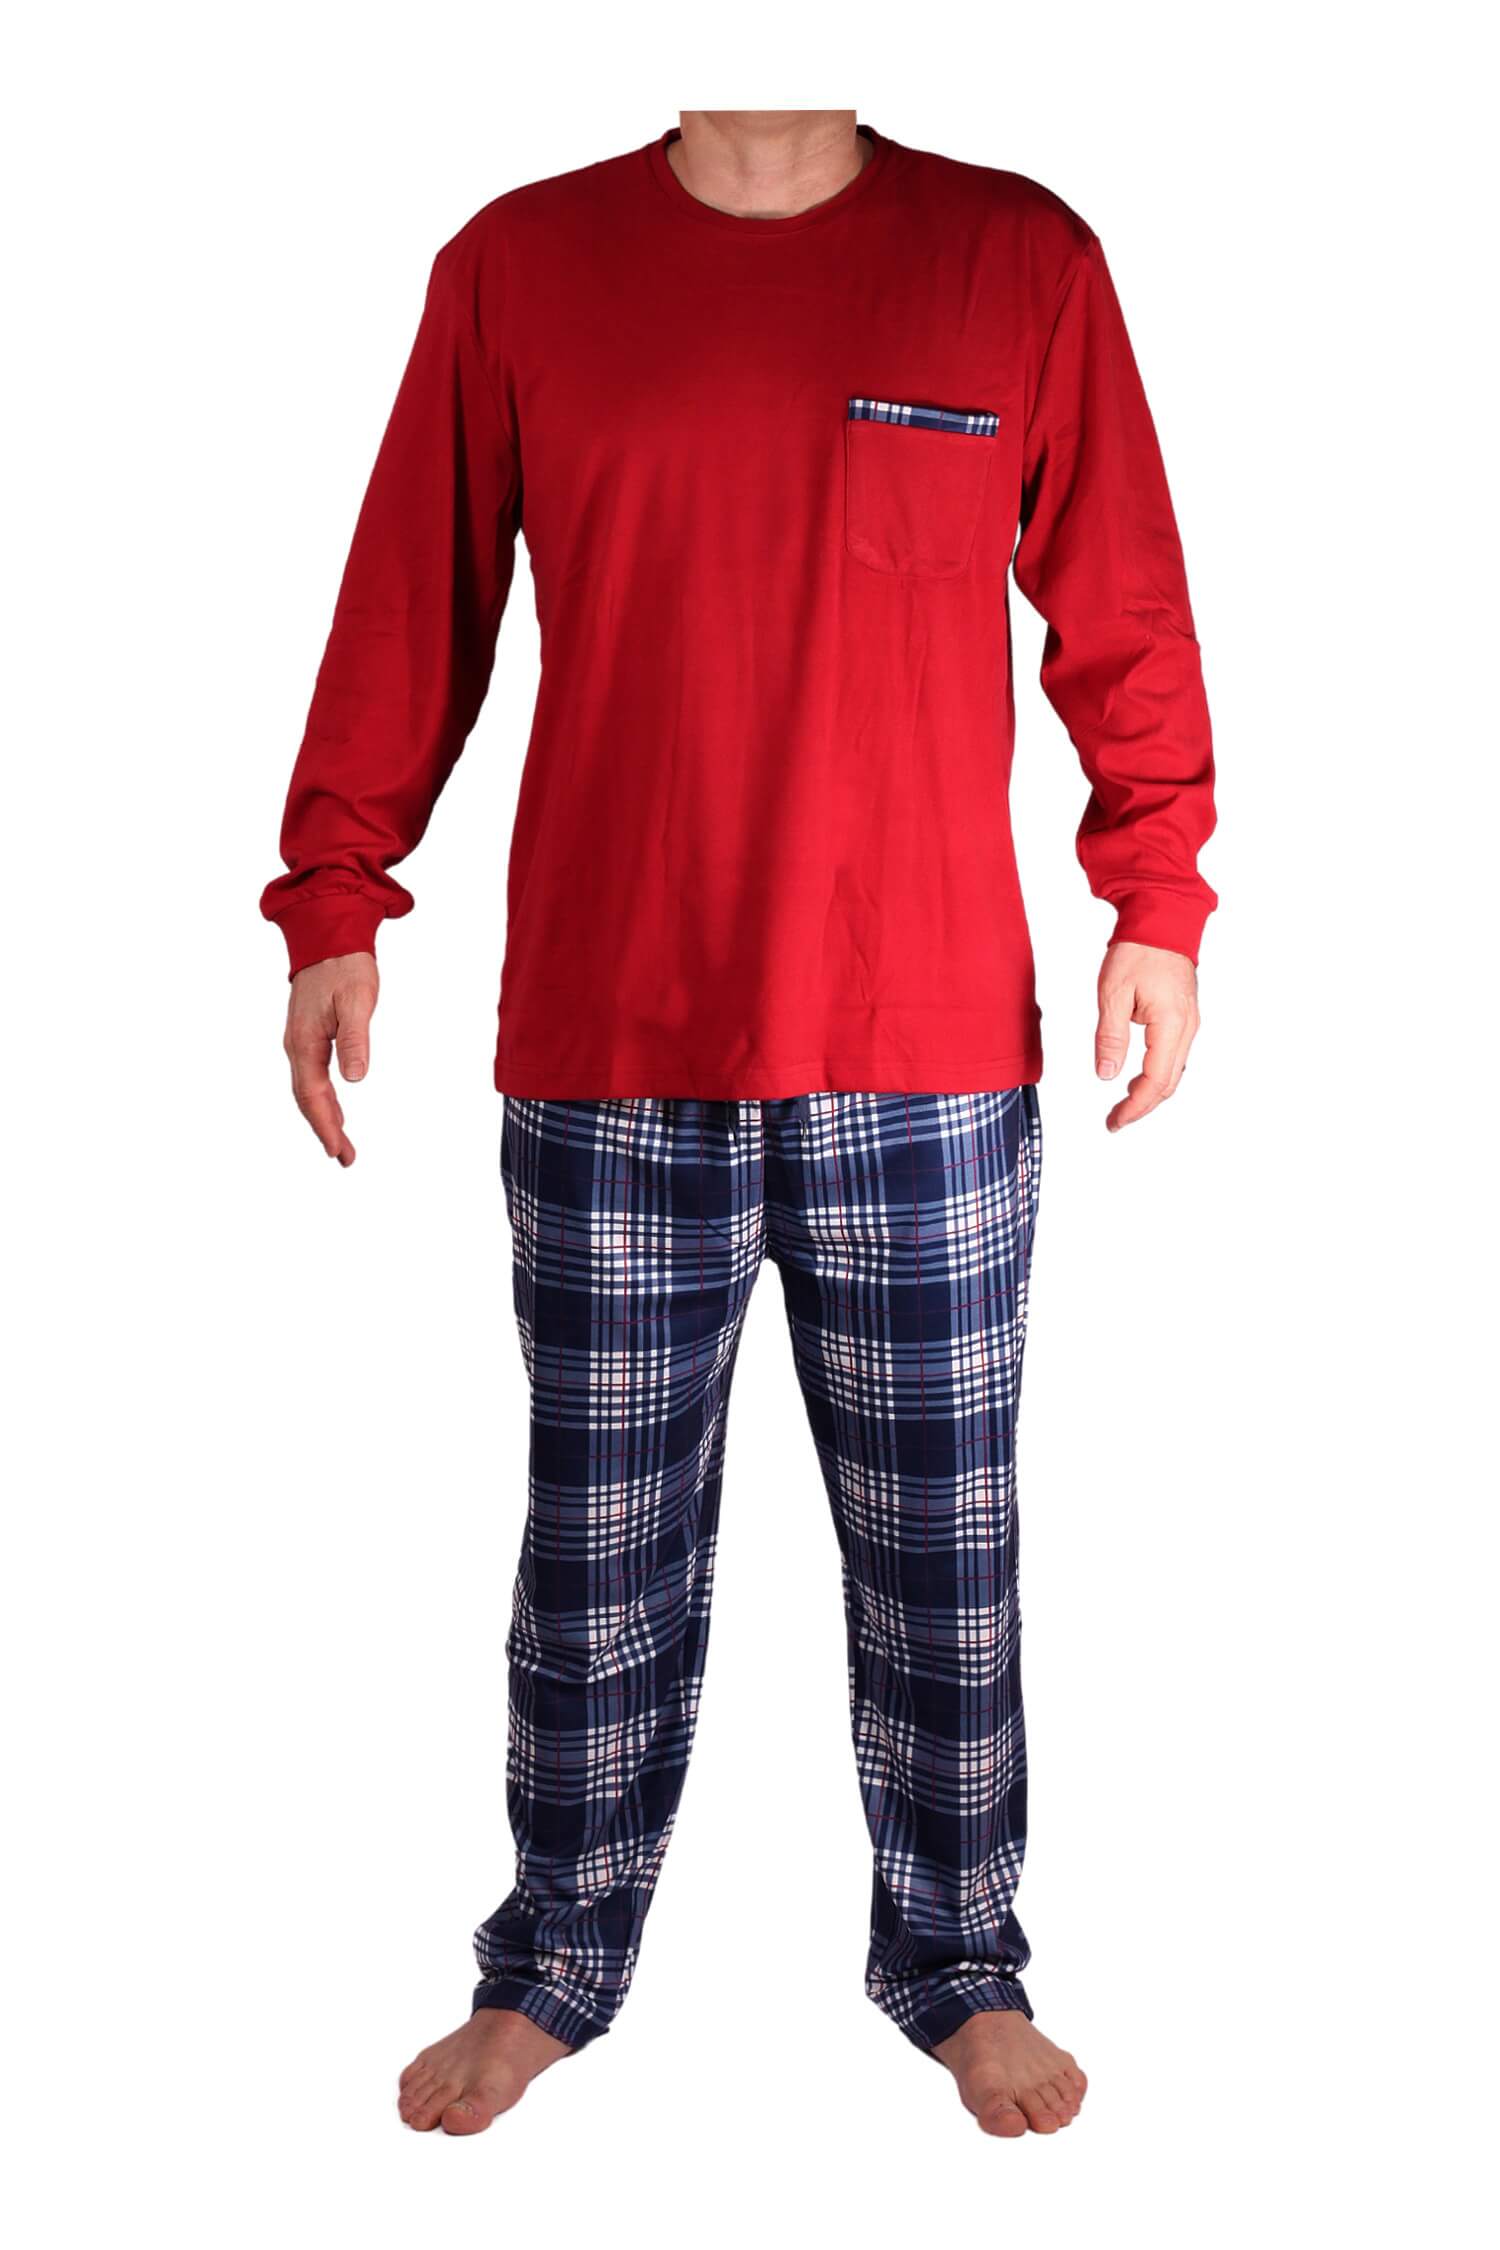 Zdenda Lux pánské pyžamo s flísem 3XL červená